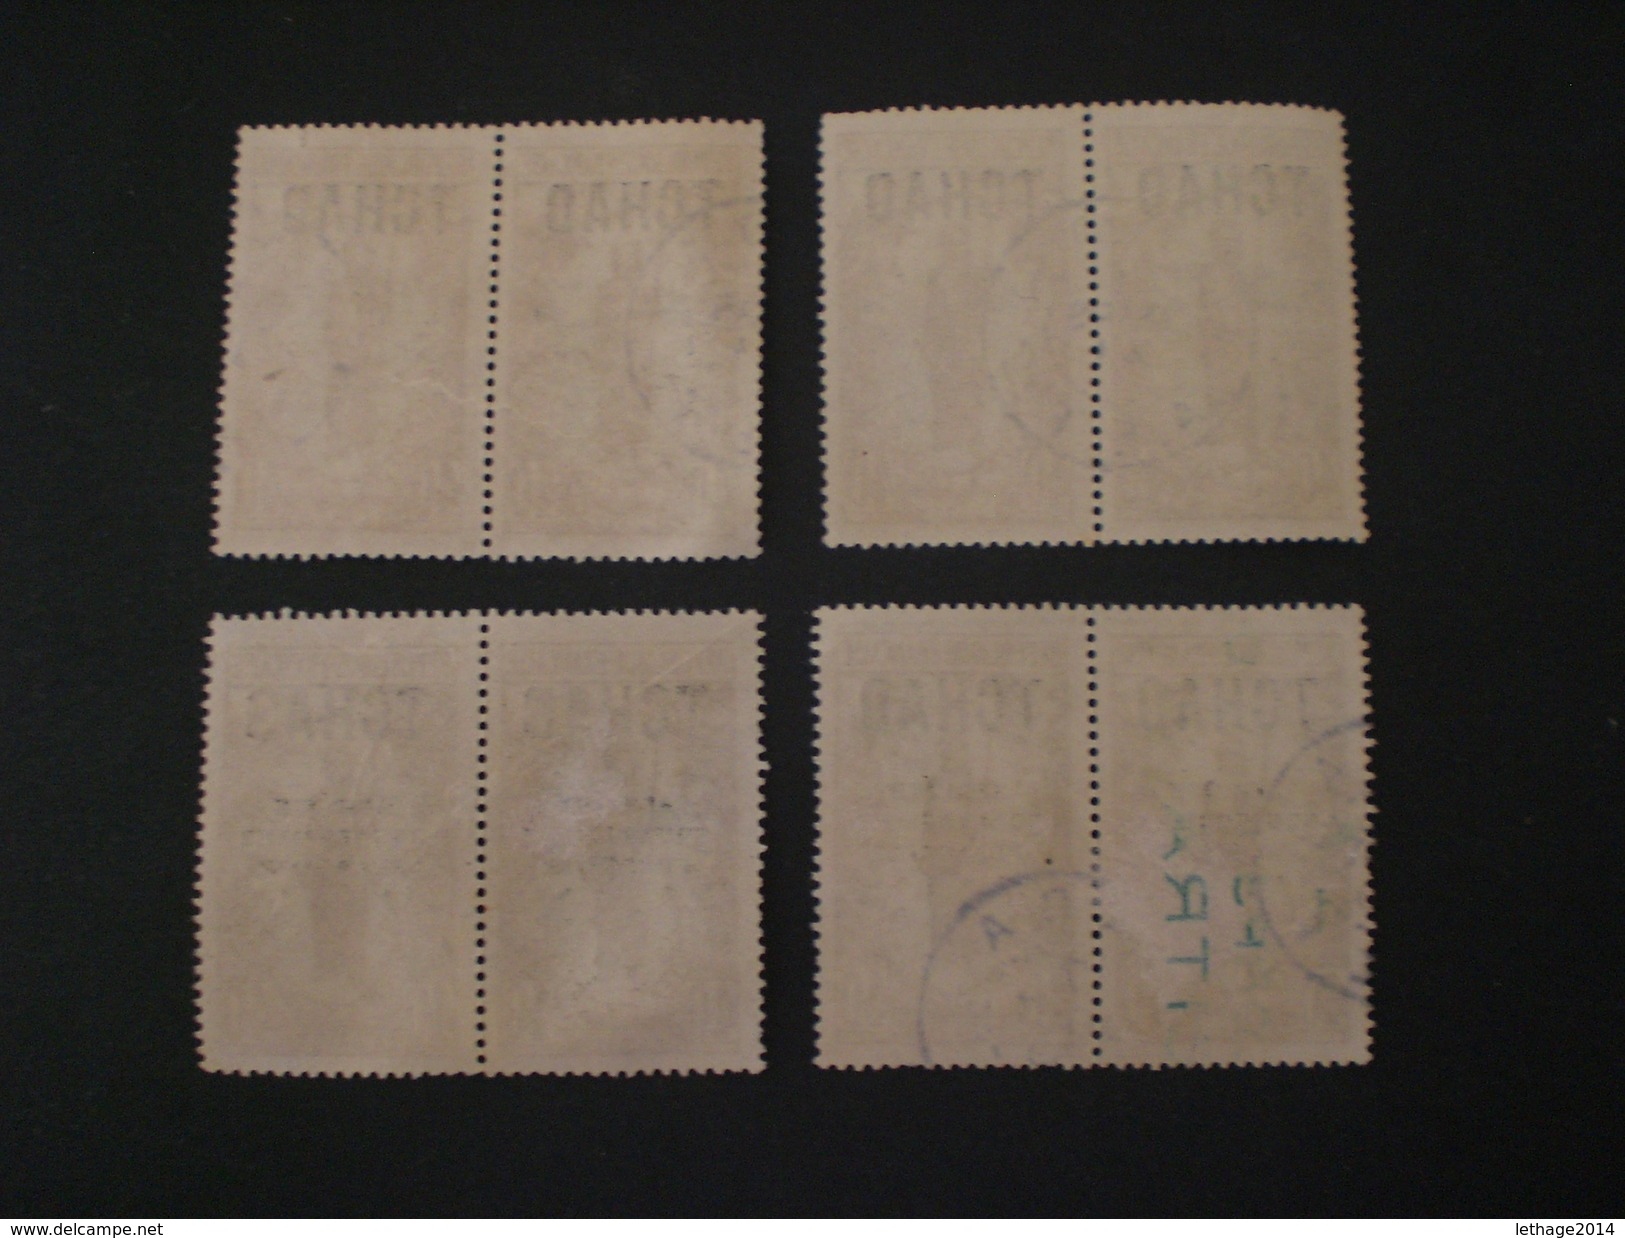 TCHAD CHAD 1924 Femme Bakalois Overprinted "AFRIQUE EQUATORIALE FRANCAISE" - Used Stamps